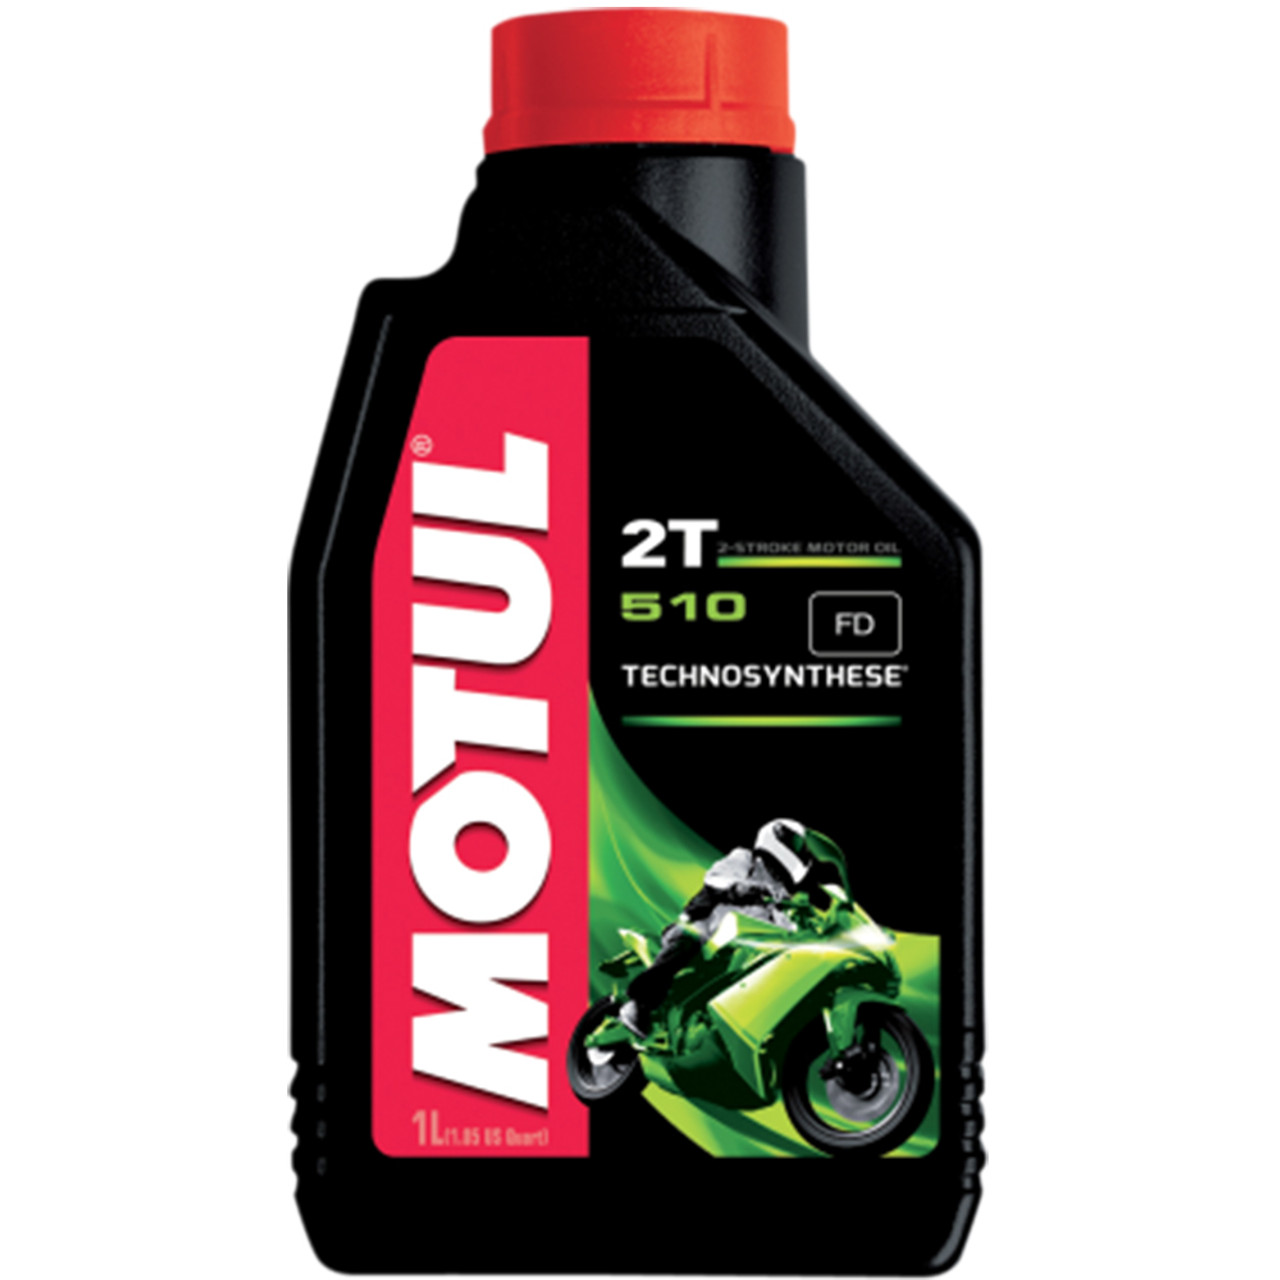 Motul 710 2-T 2 Stroke Oil 1 Liter